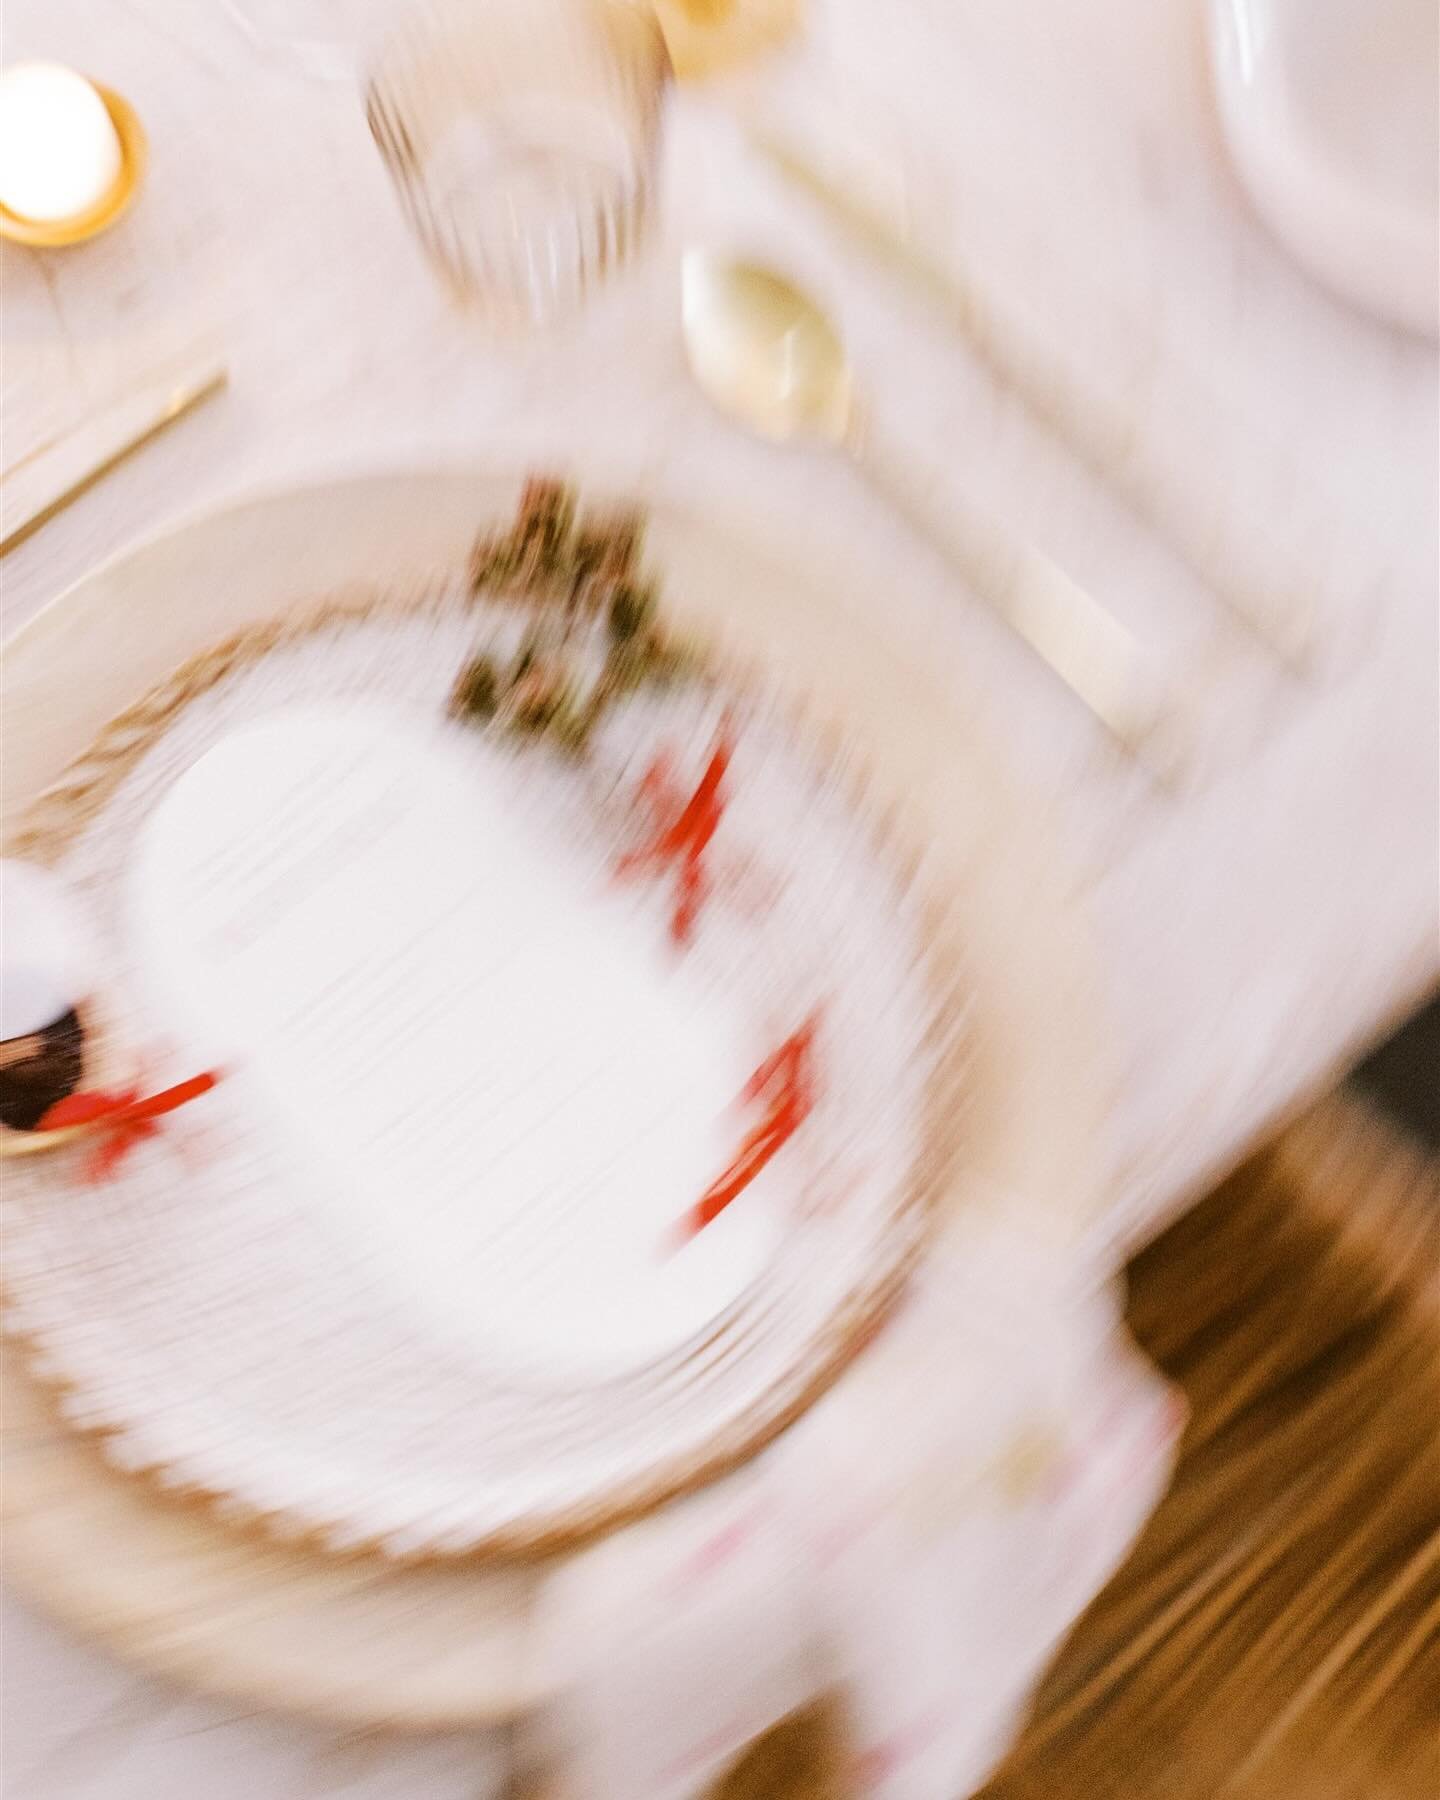 Who&rsquo;s ready for al fresco?

📸: @sloanephoto_ 

#wedding #weddingtable #weddingdesign #tabletop #alfresco #spring #reception #florist #sandiegoflorist #sandiegofloraldesigner #floraldesign #engaged #engagement